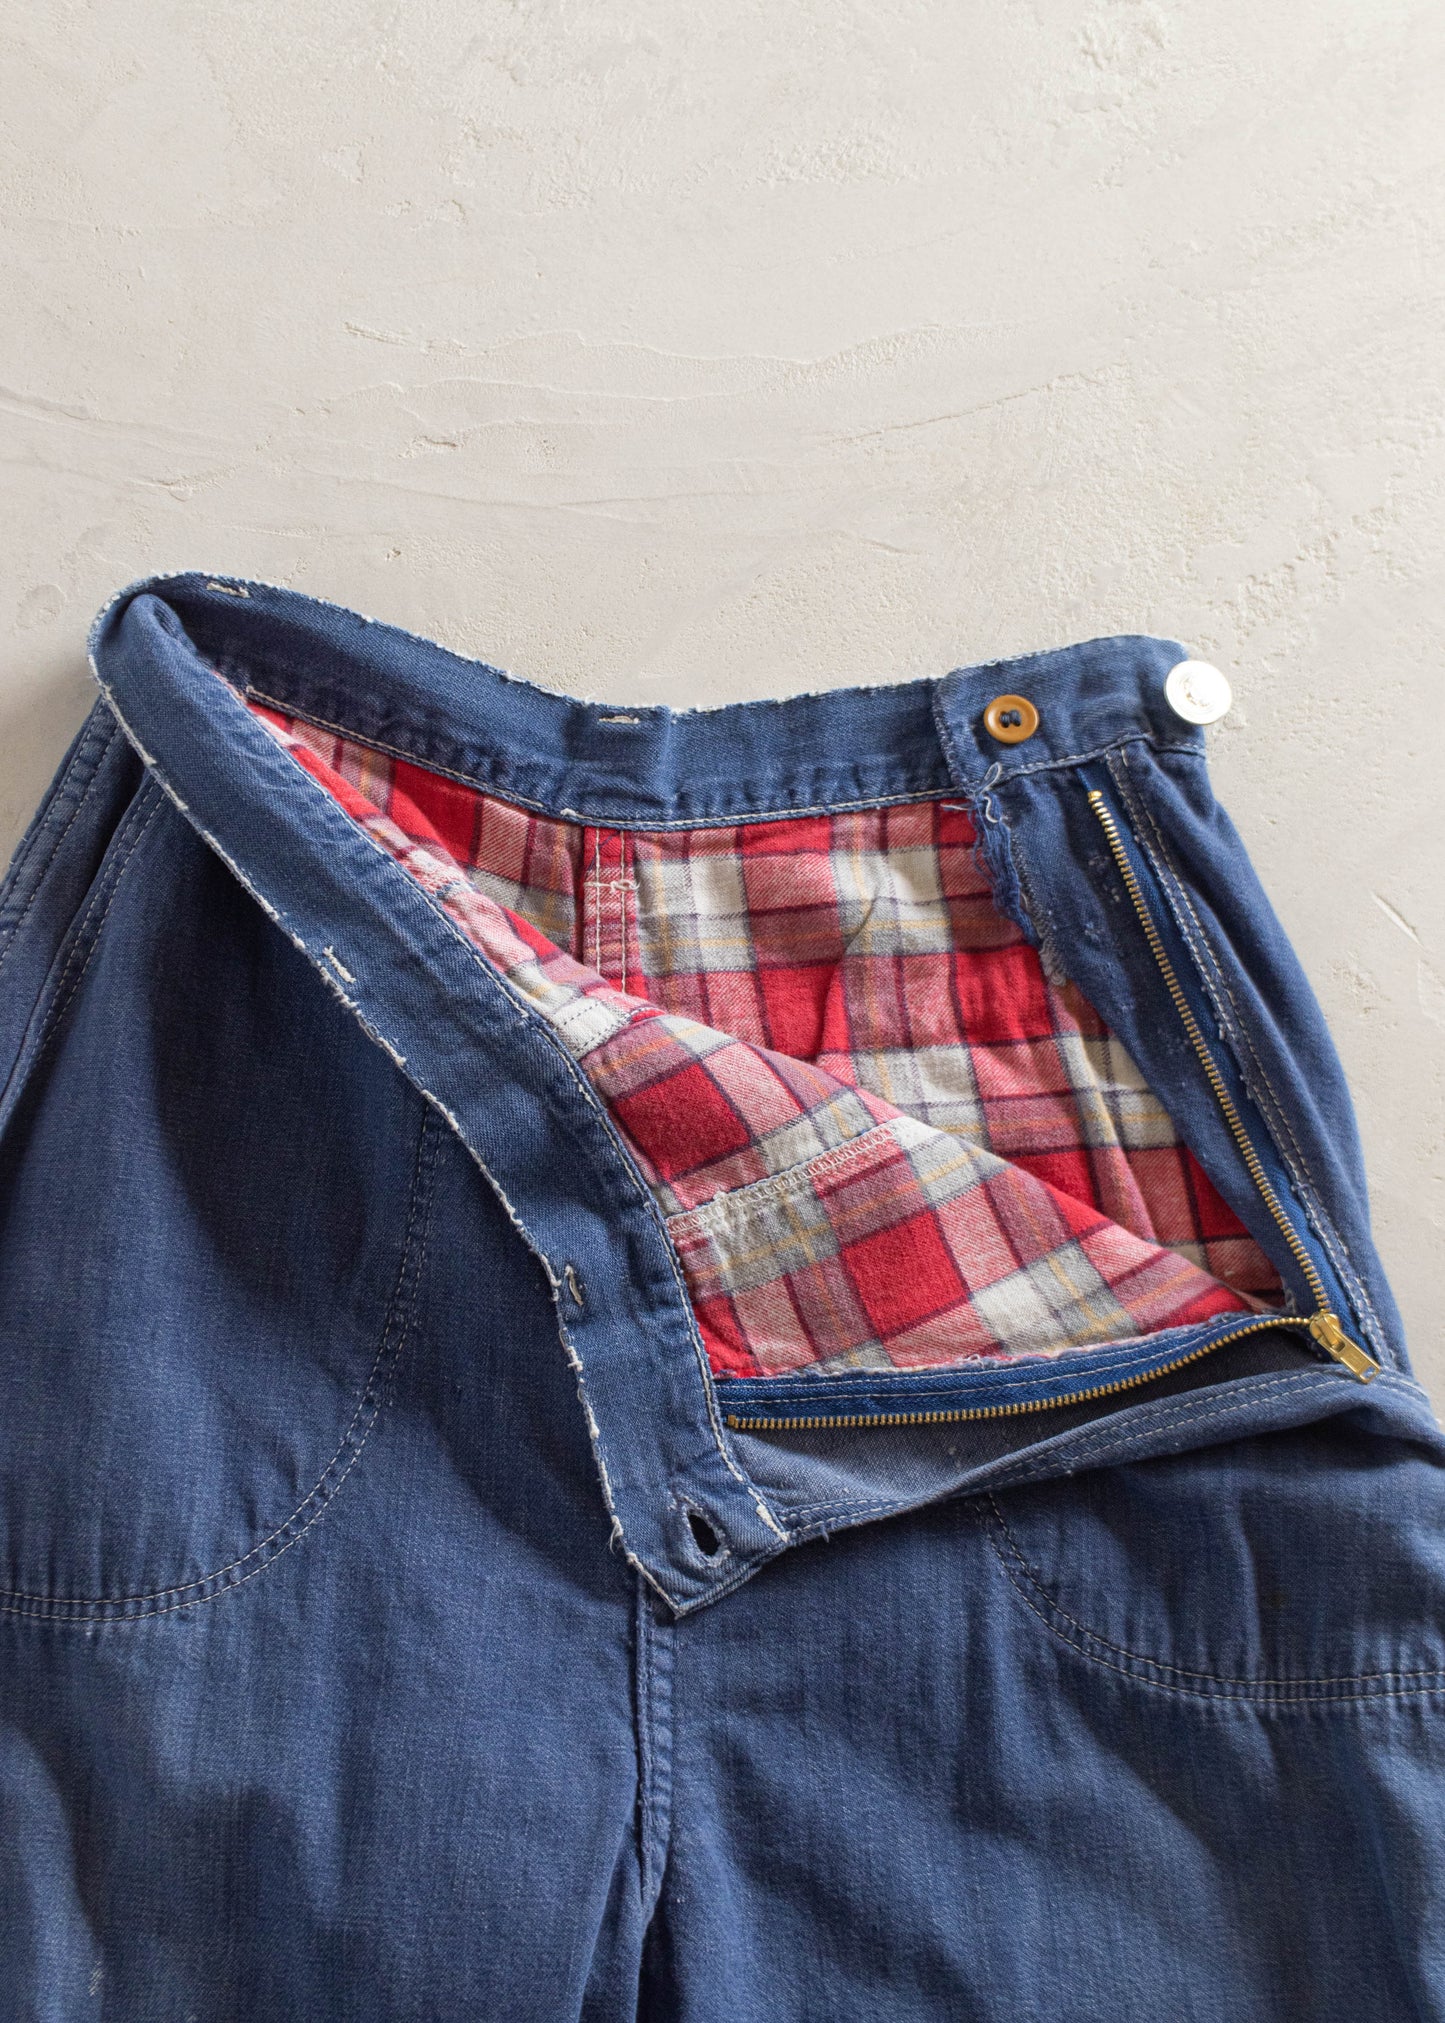 Vintage 1940s Side Zip Darkwash Jeans Size Women's 24